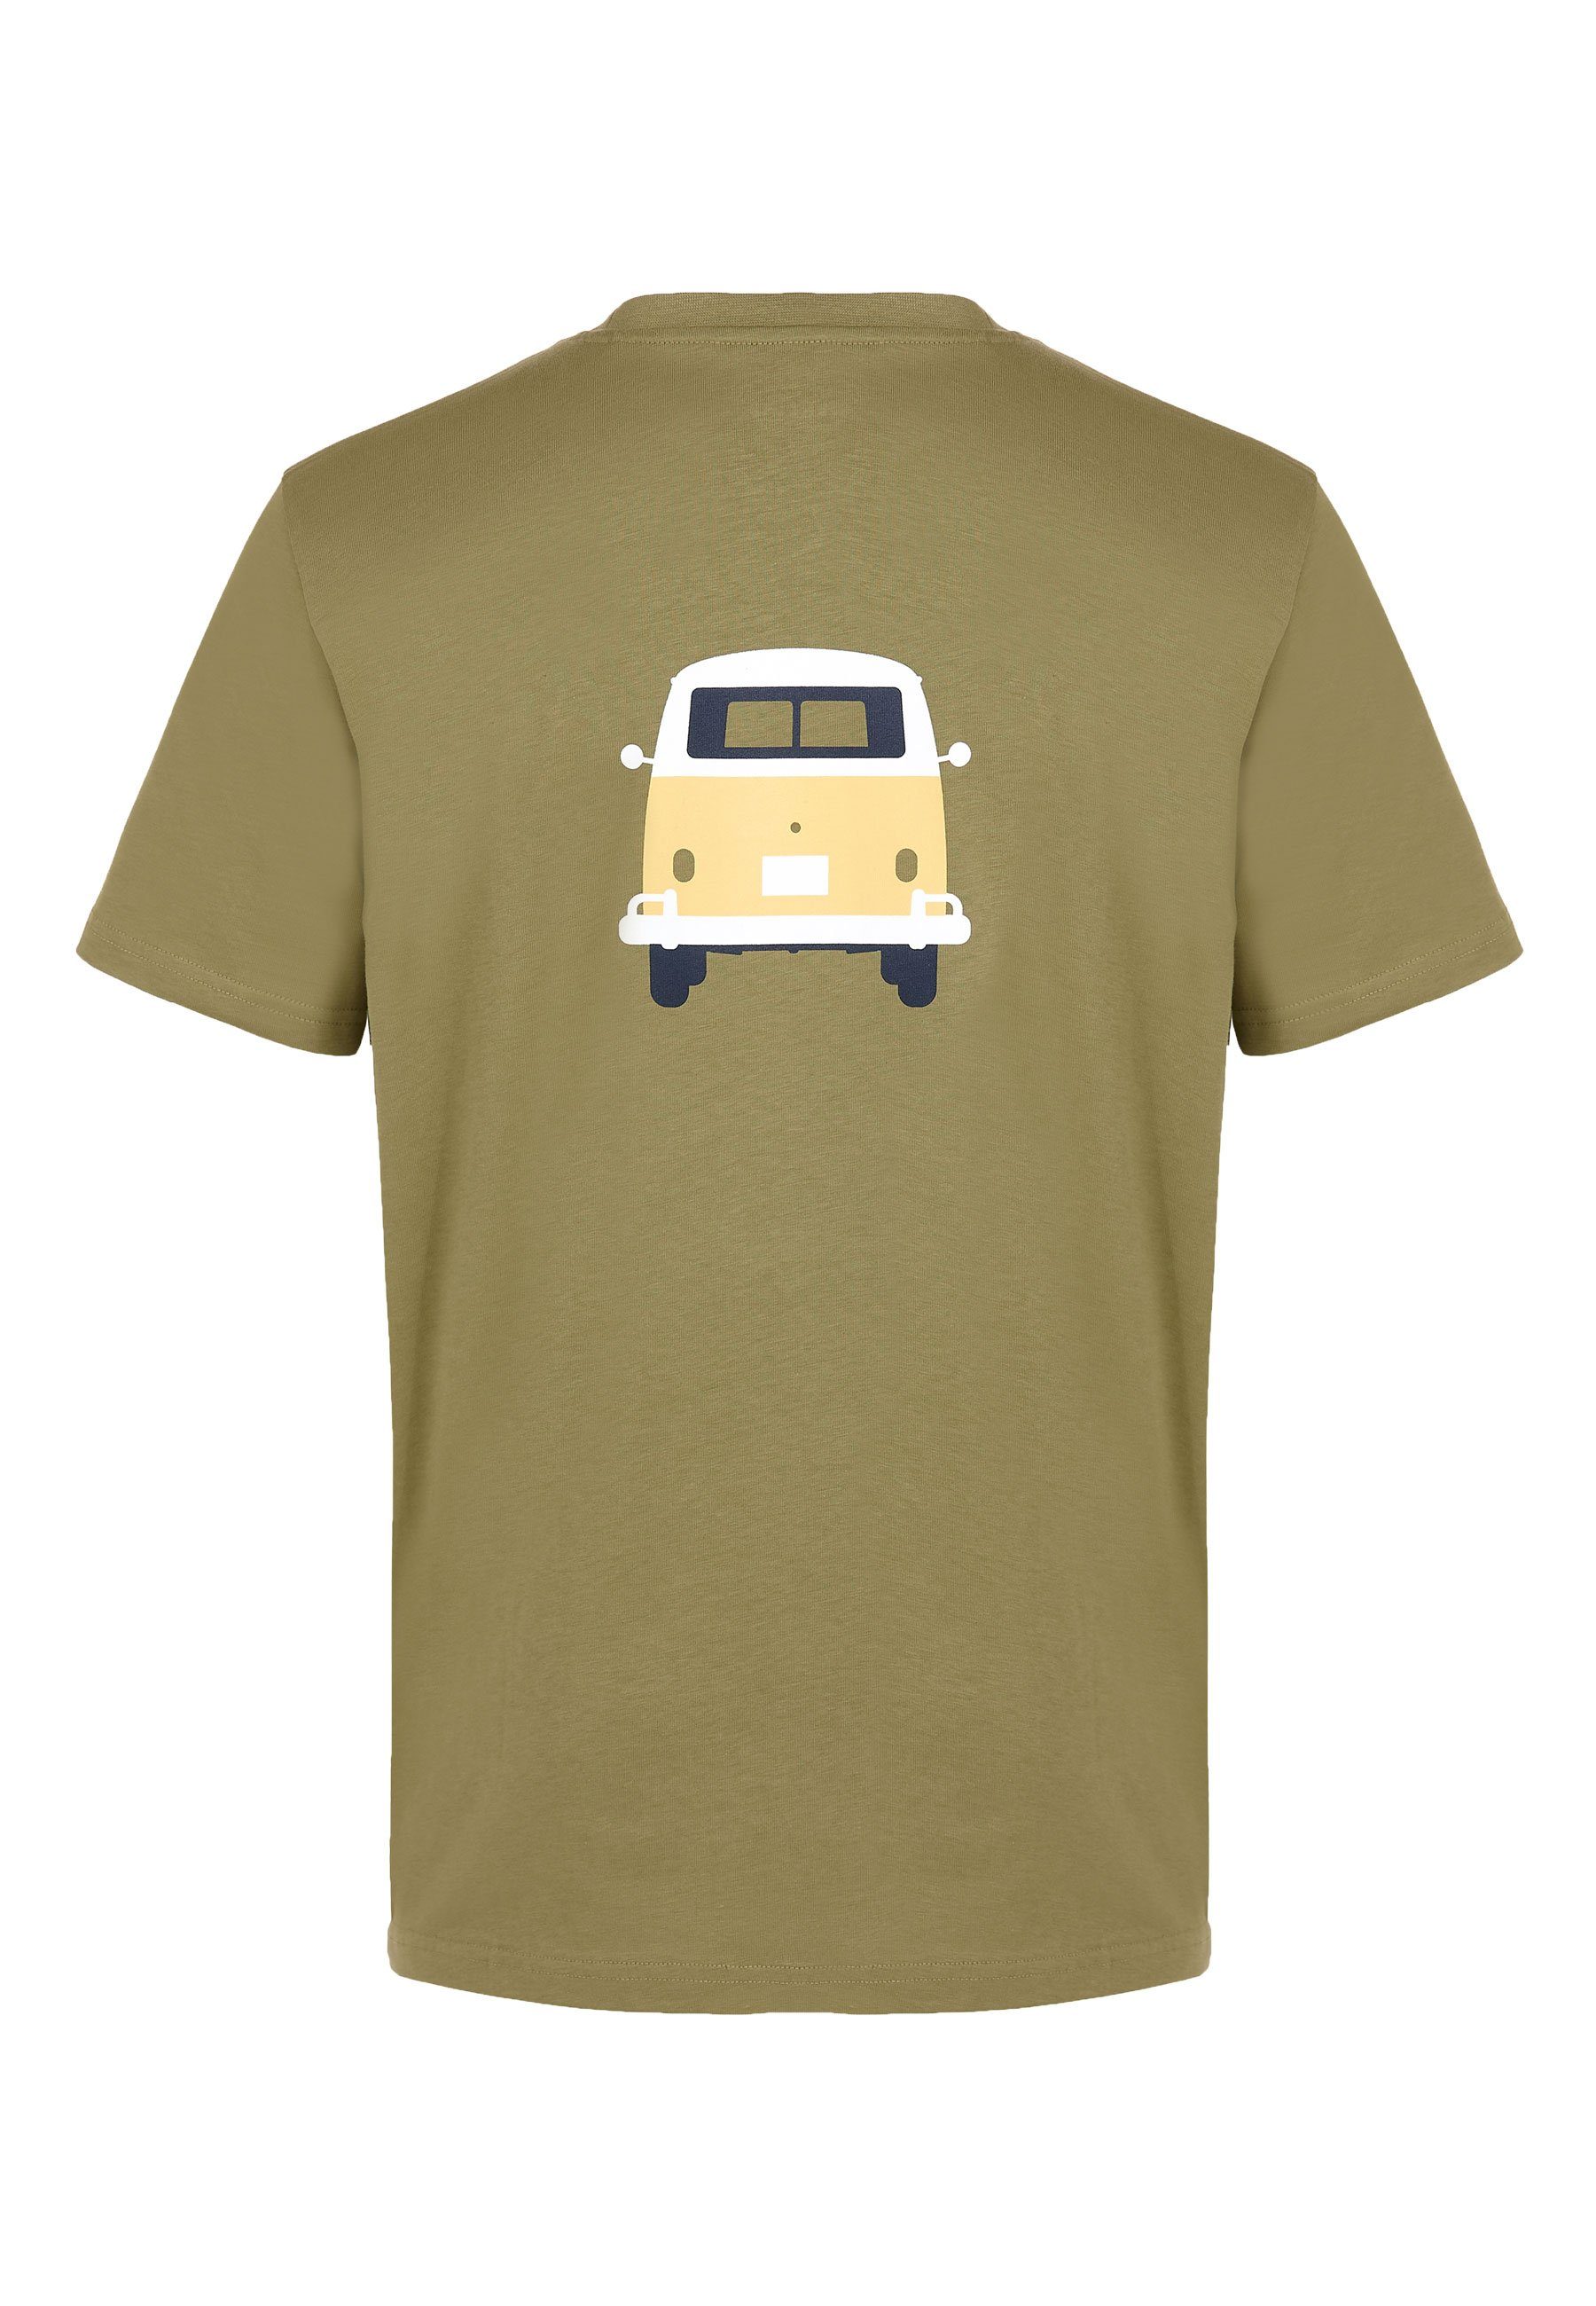 Rücken VW lizenzierter Elkline Bulli Brust avocado Methusalem Print T-Shirt